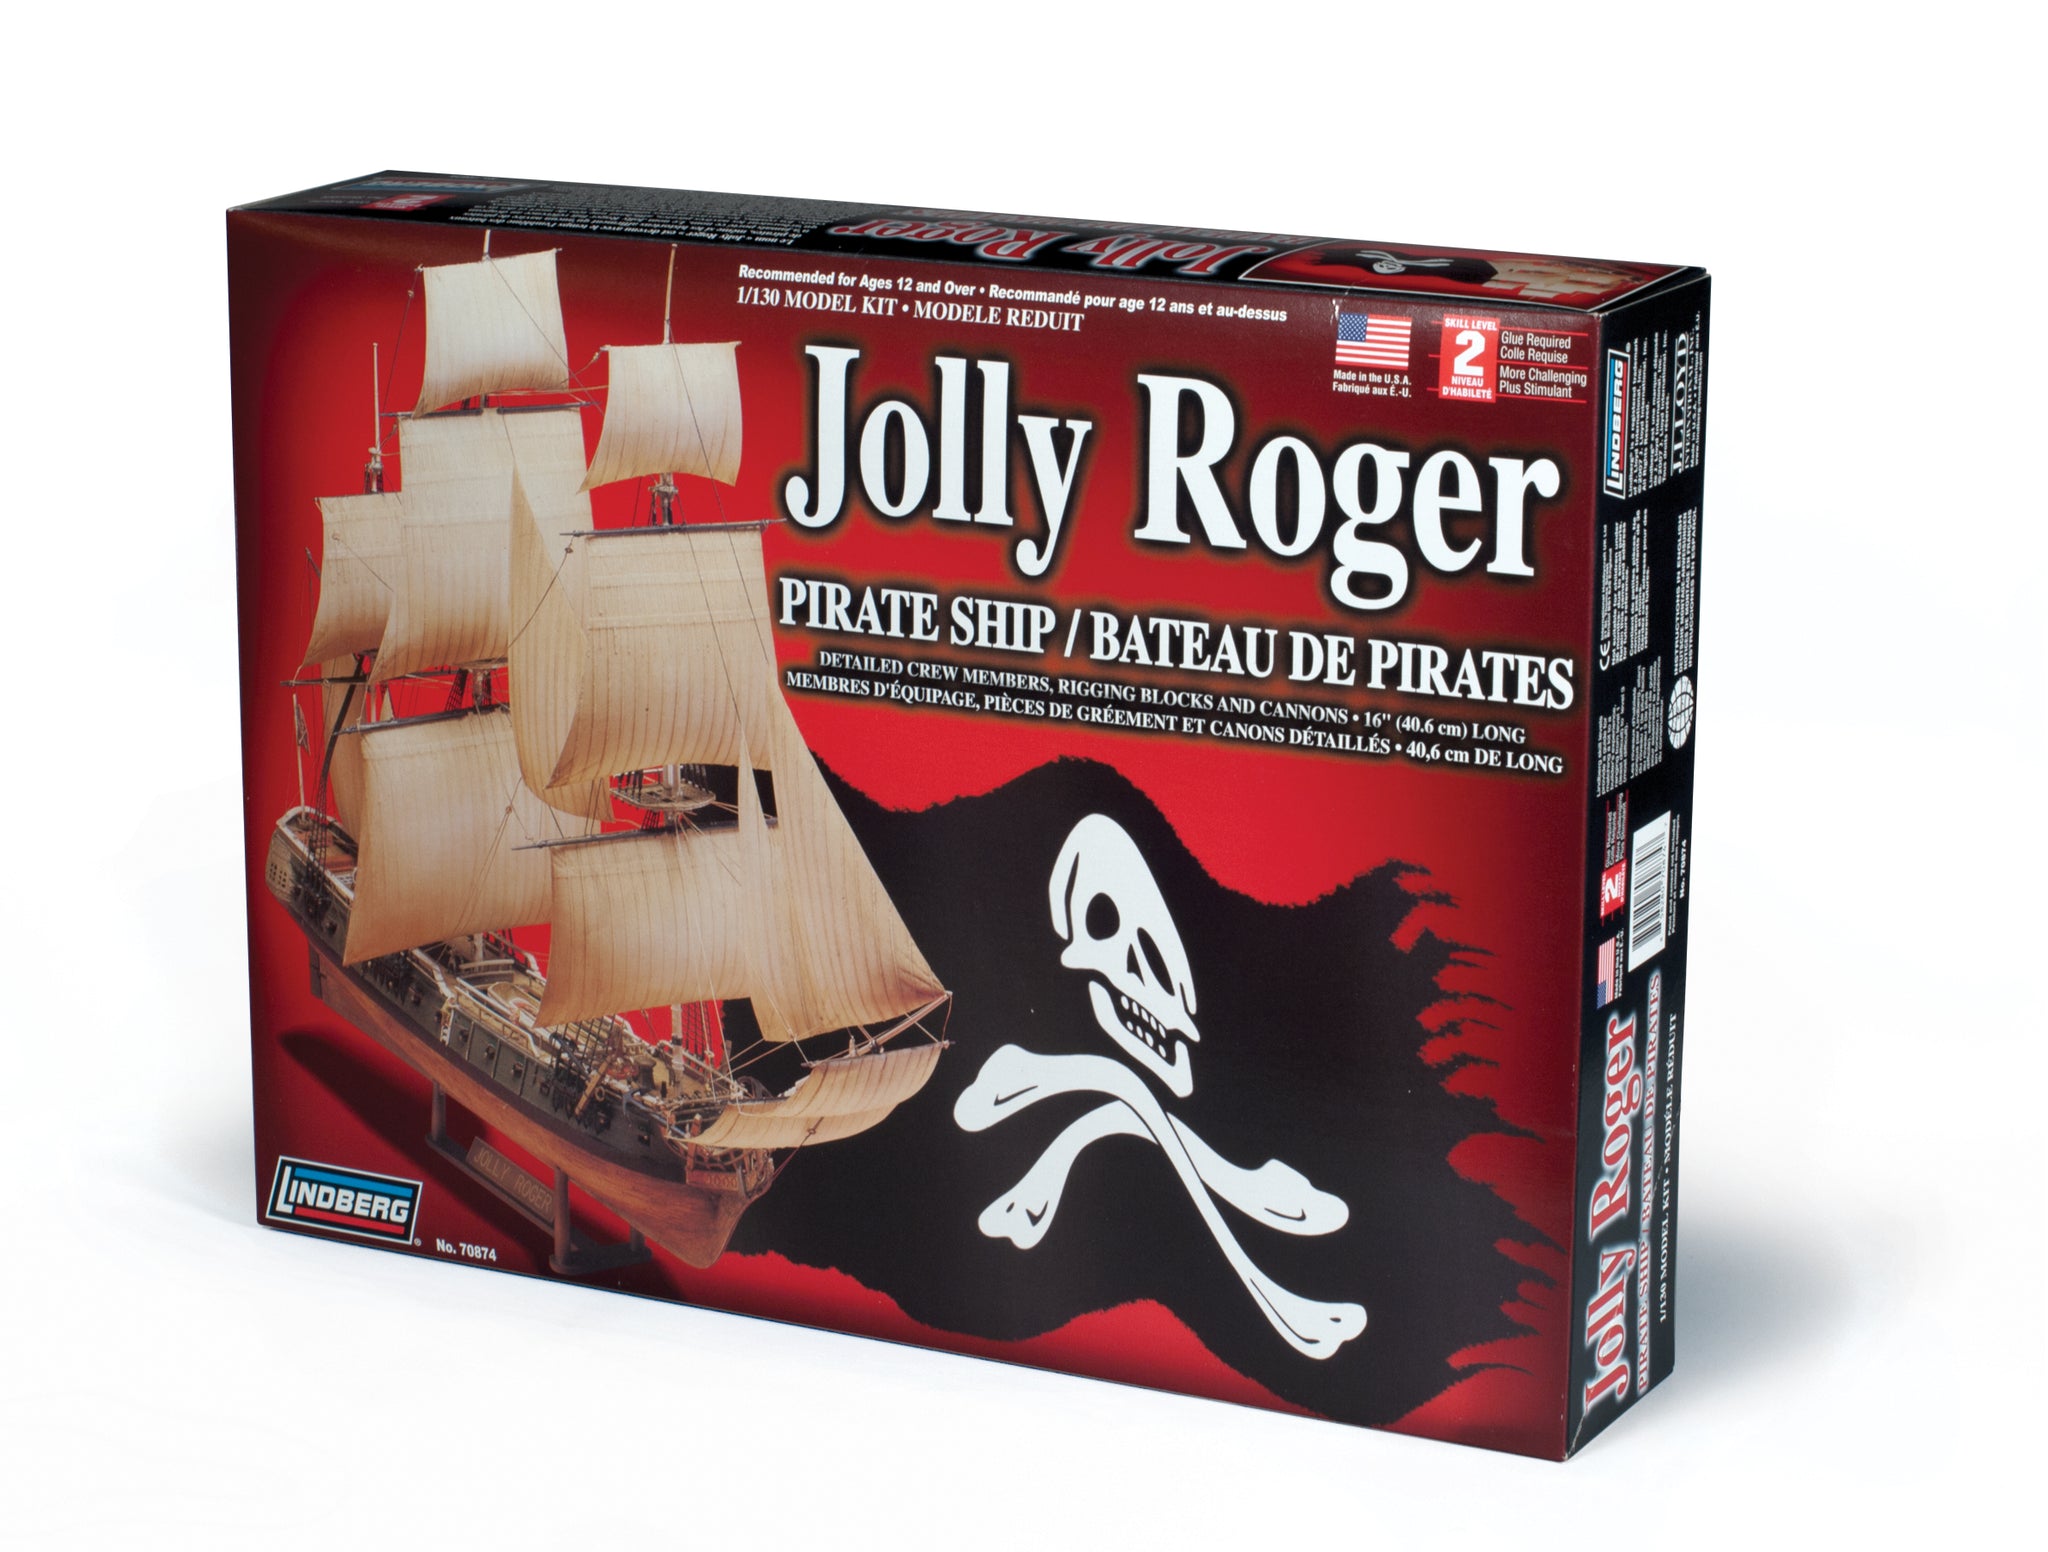 model pirate ship kits